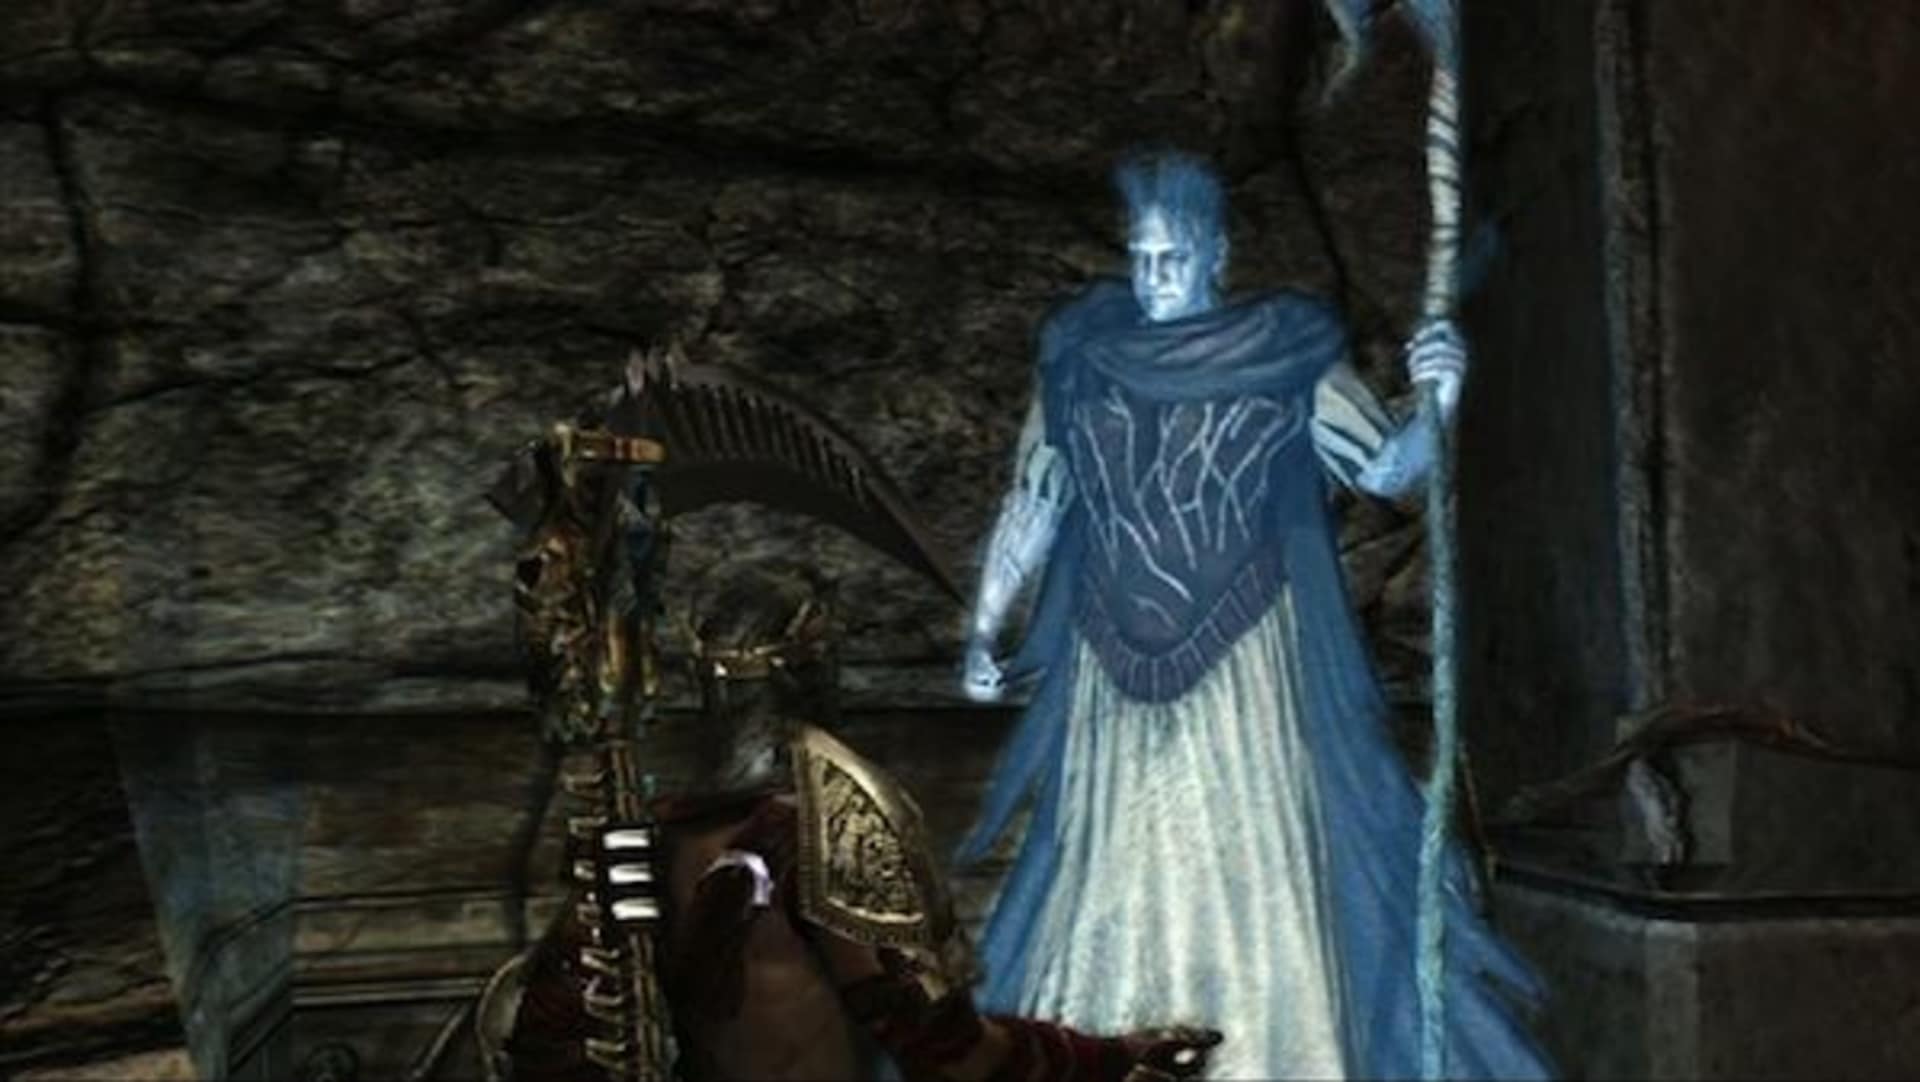 Dante's Inferno Walkthrough - Chapter 2: Limbo Part 3 